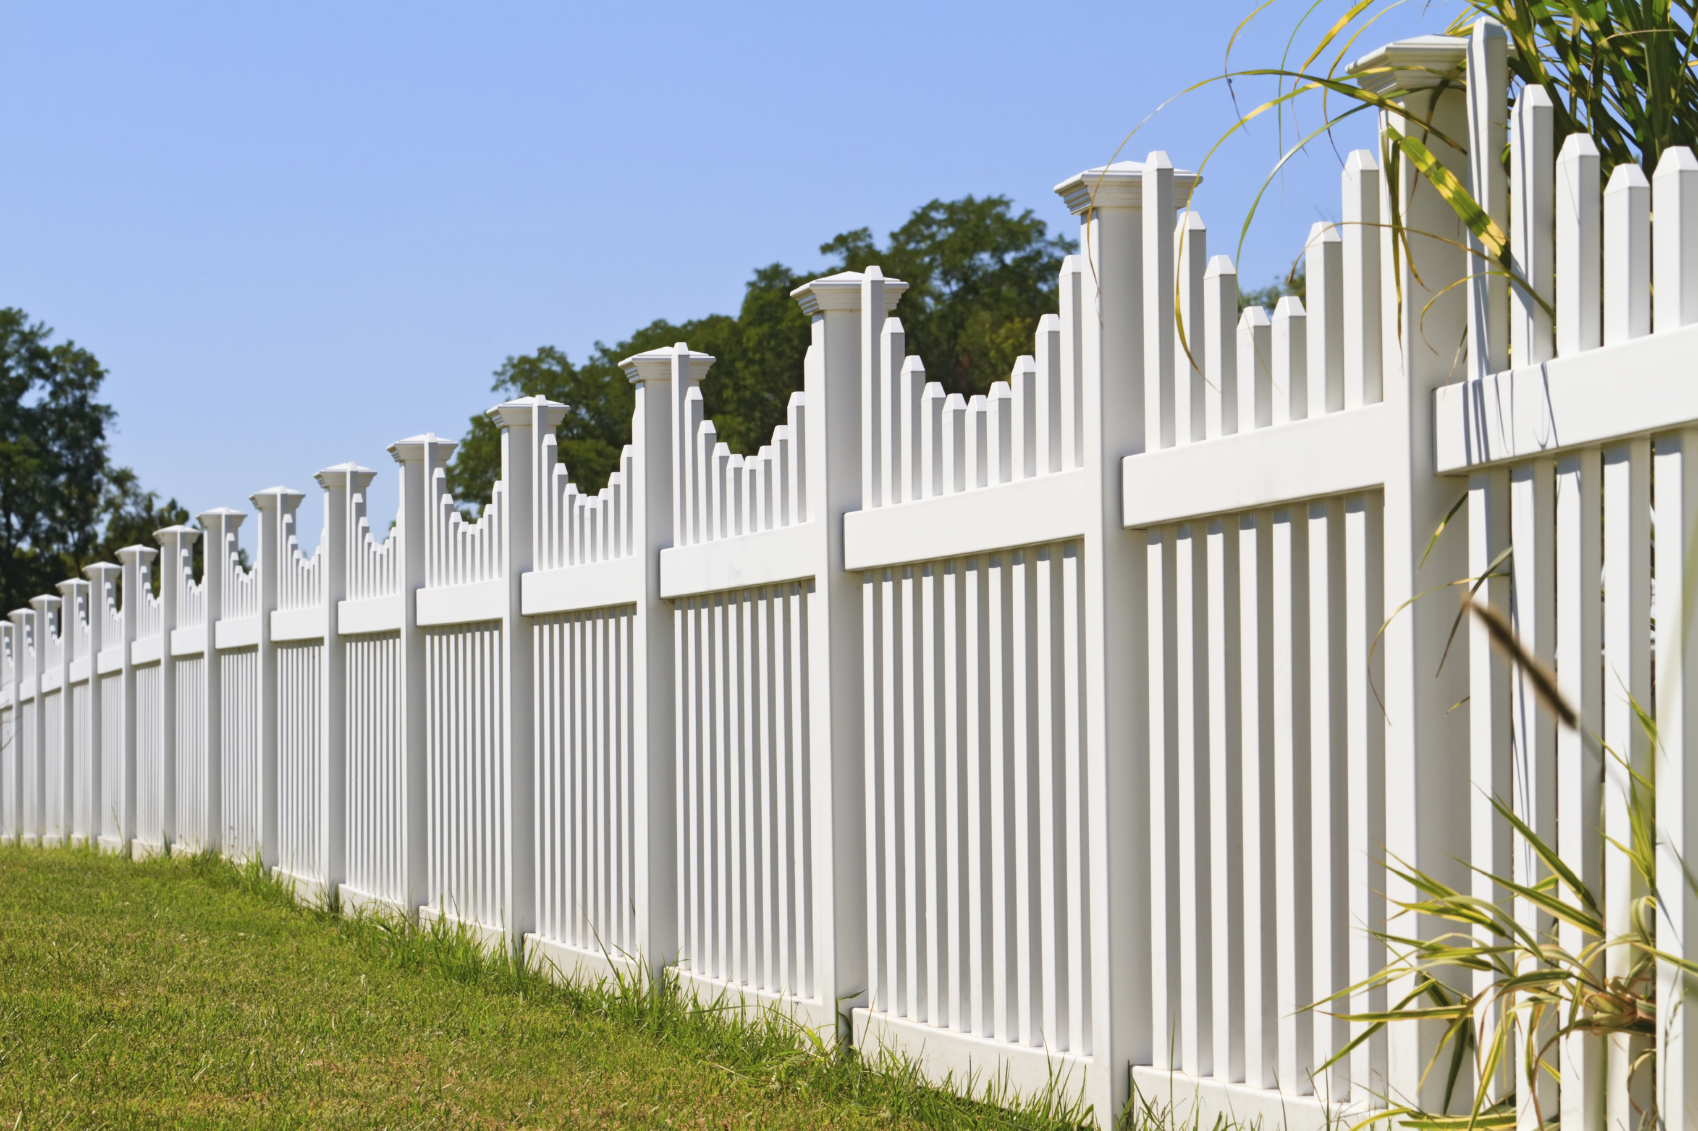 Good Neighbors Talk Before Building Fences | Zillow Blog